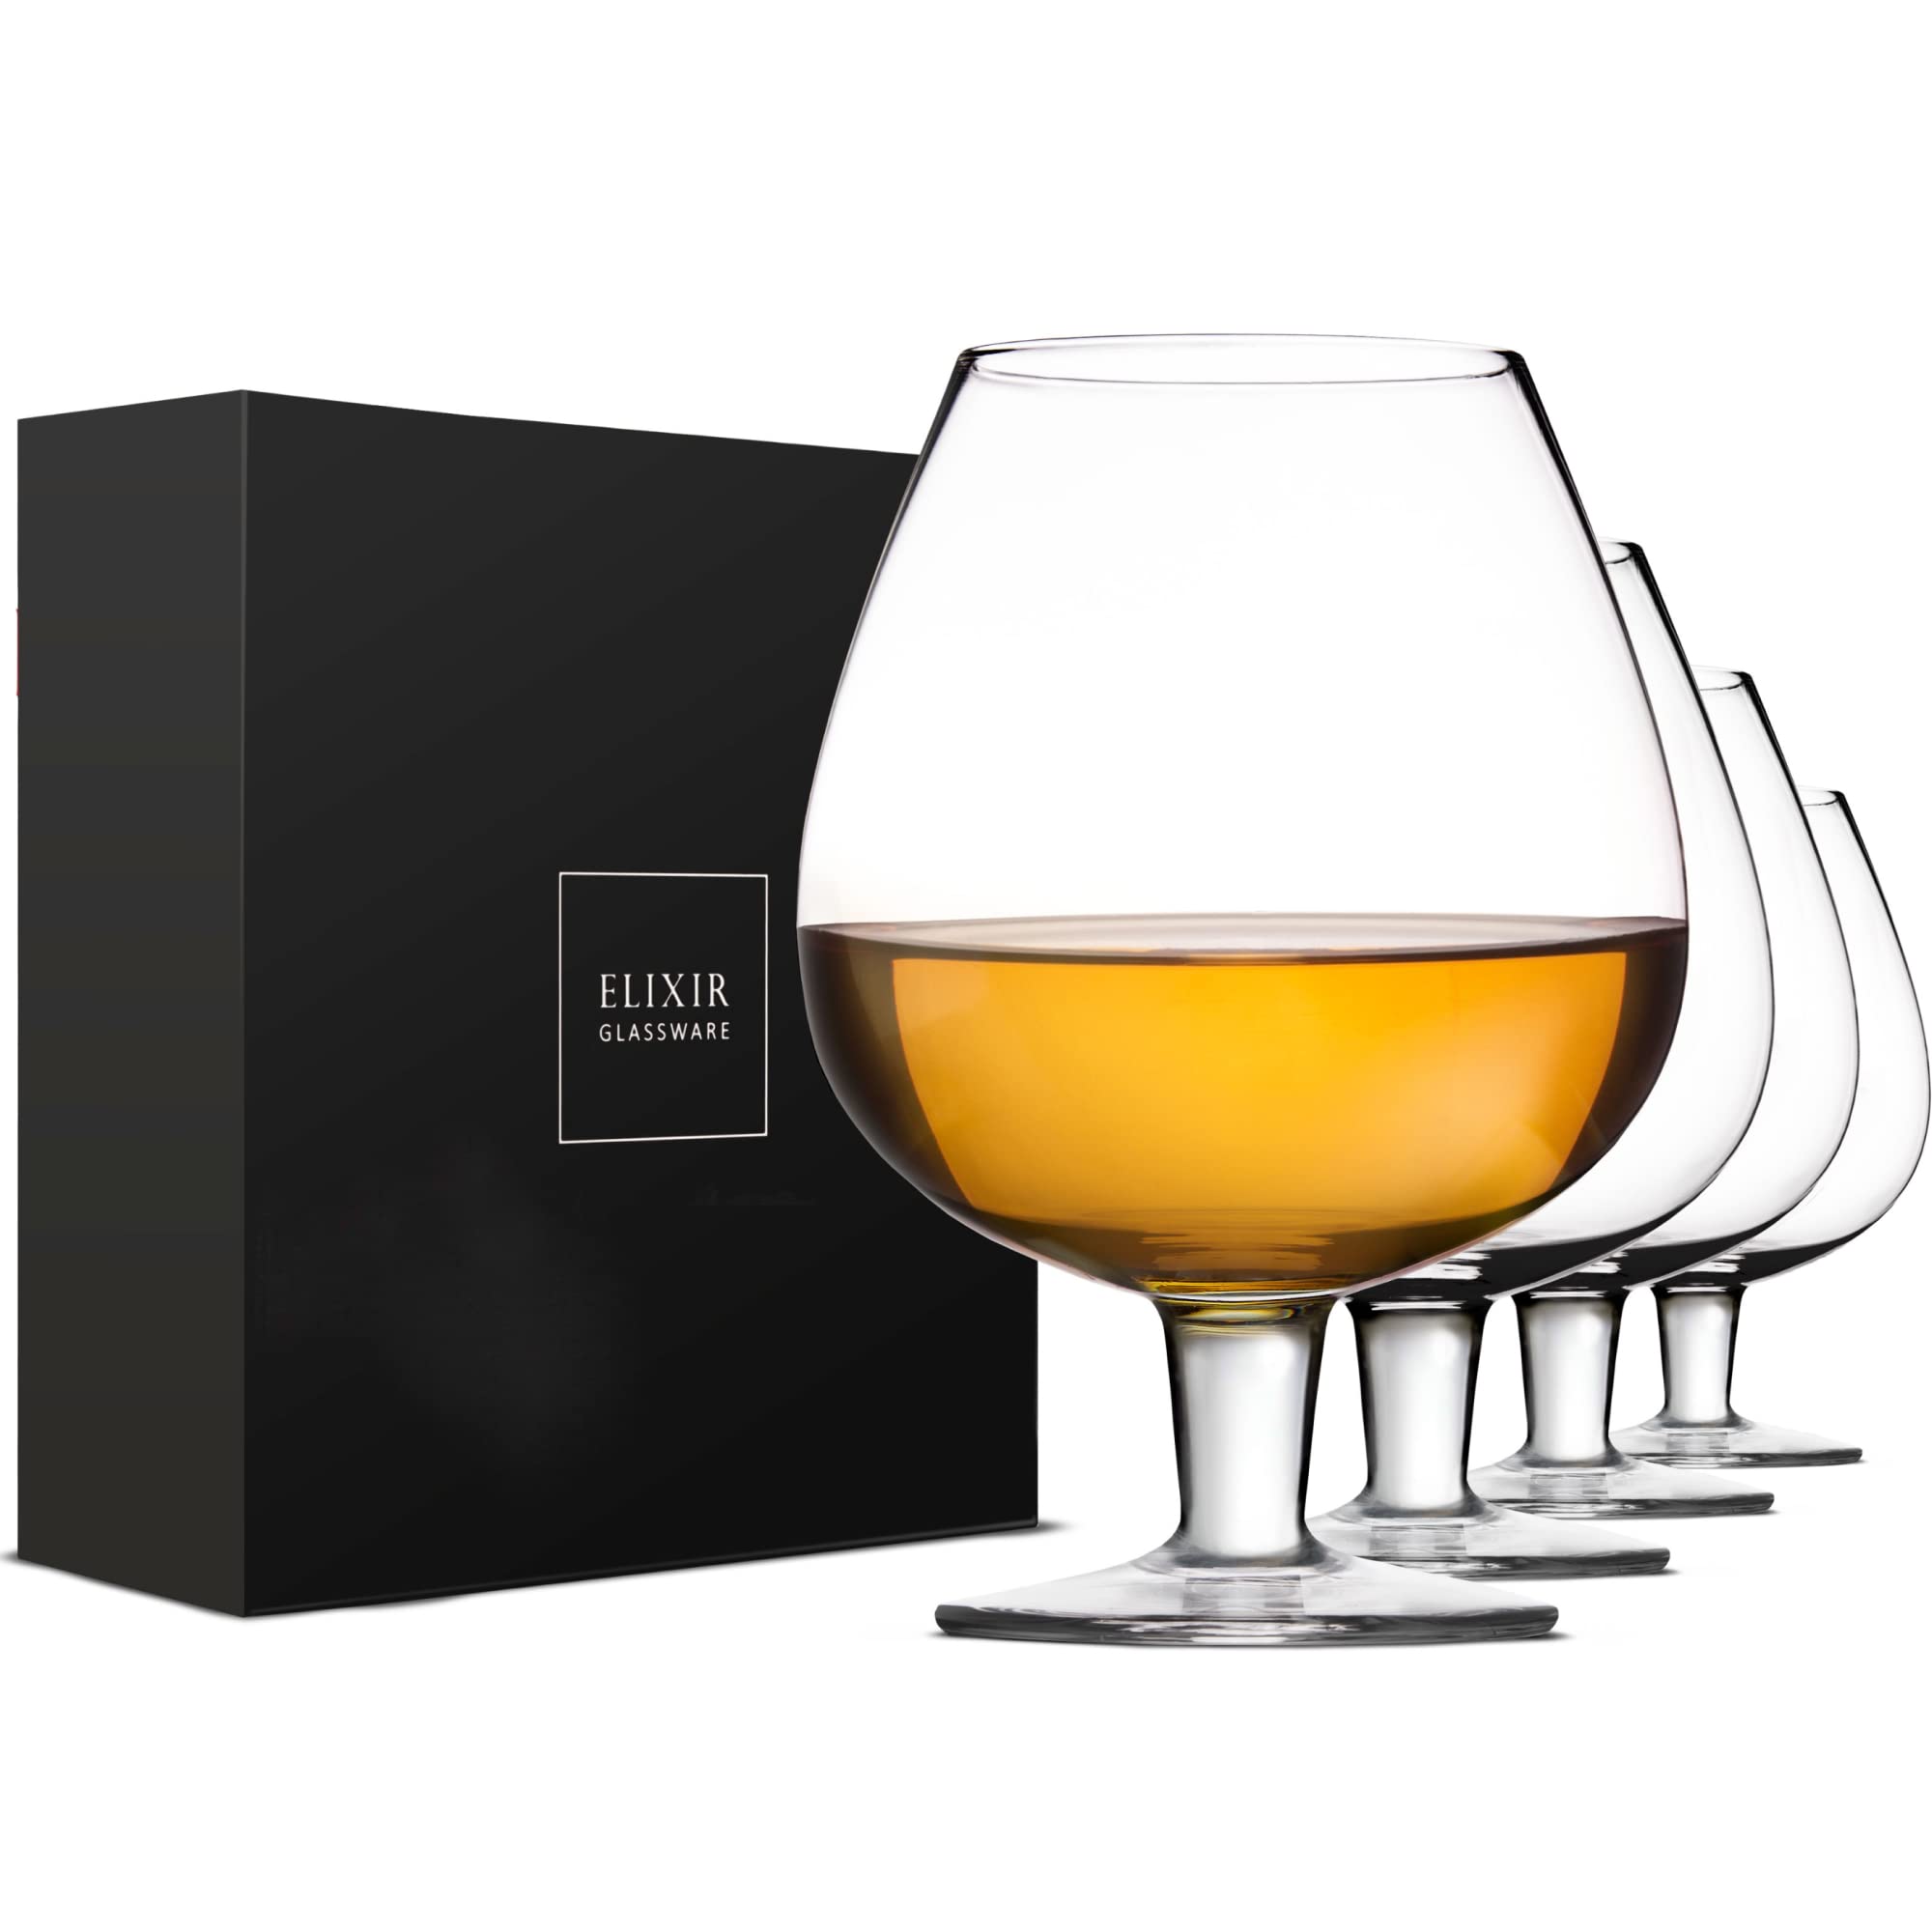 Crystal Whiskey Glasses Set of 4-18 Oz Cognac Glasses in Gift Box - for Scotch Cocktail Rum Cognac Vodka Liquor - Unique Gift for Men at Home Bar